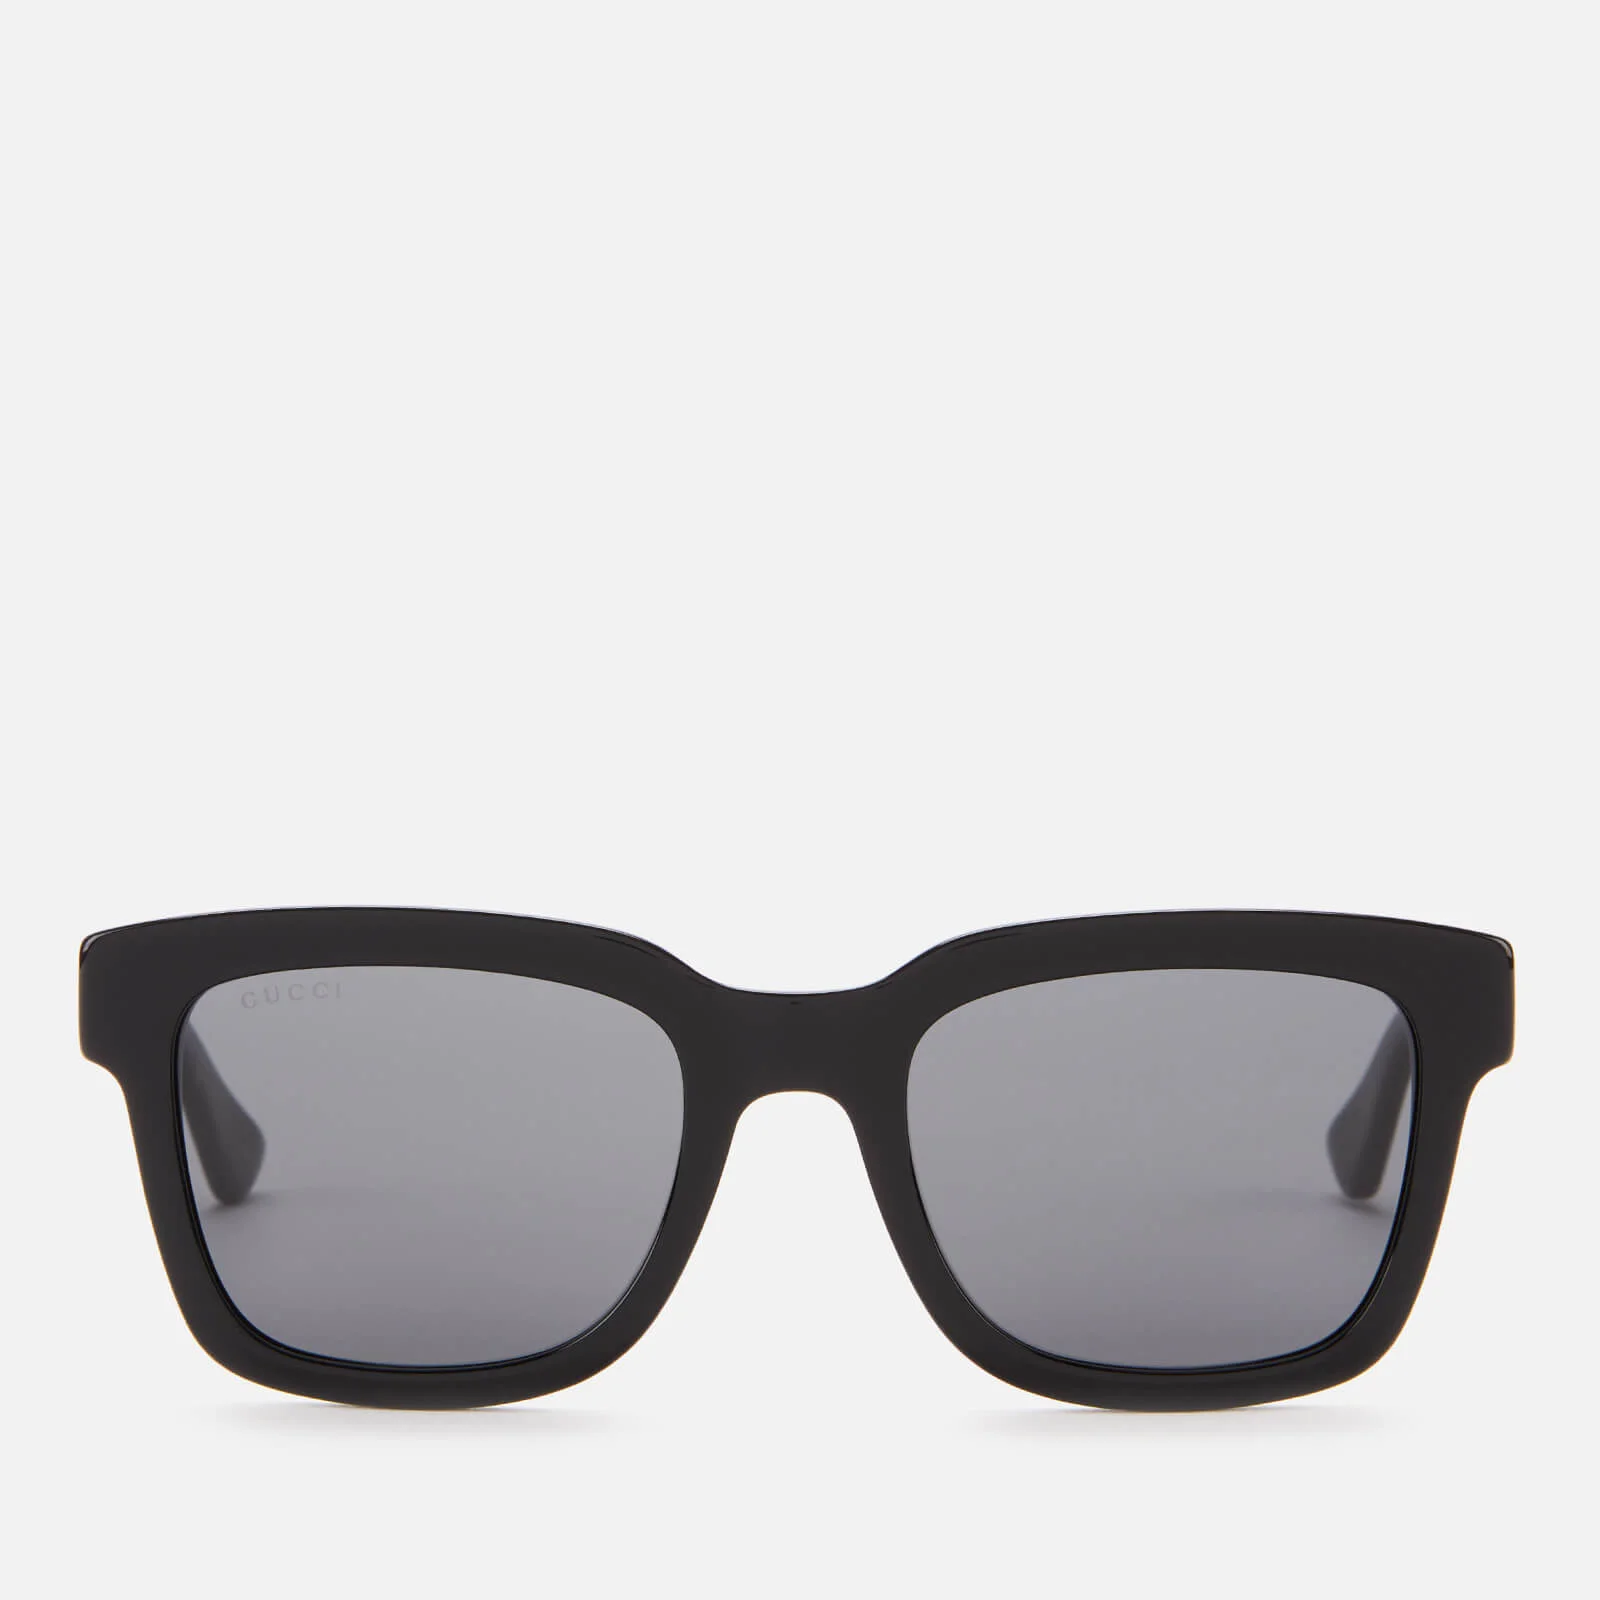 Gucci Men's Square Frame Sunglasses - Black/Smoke Image 1